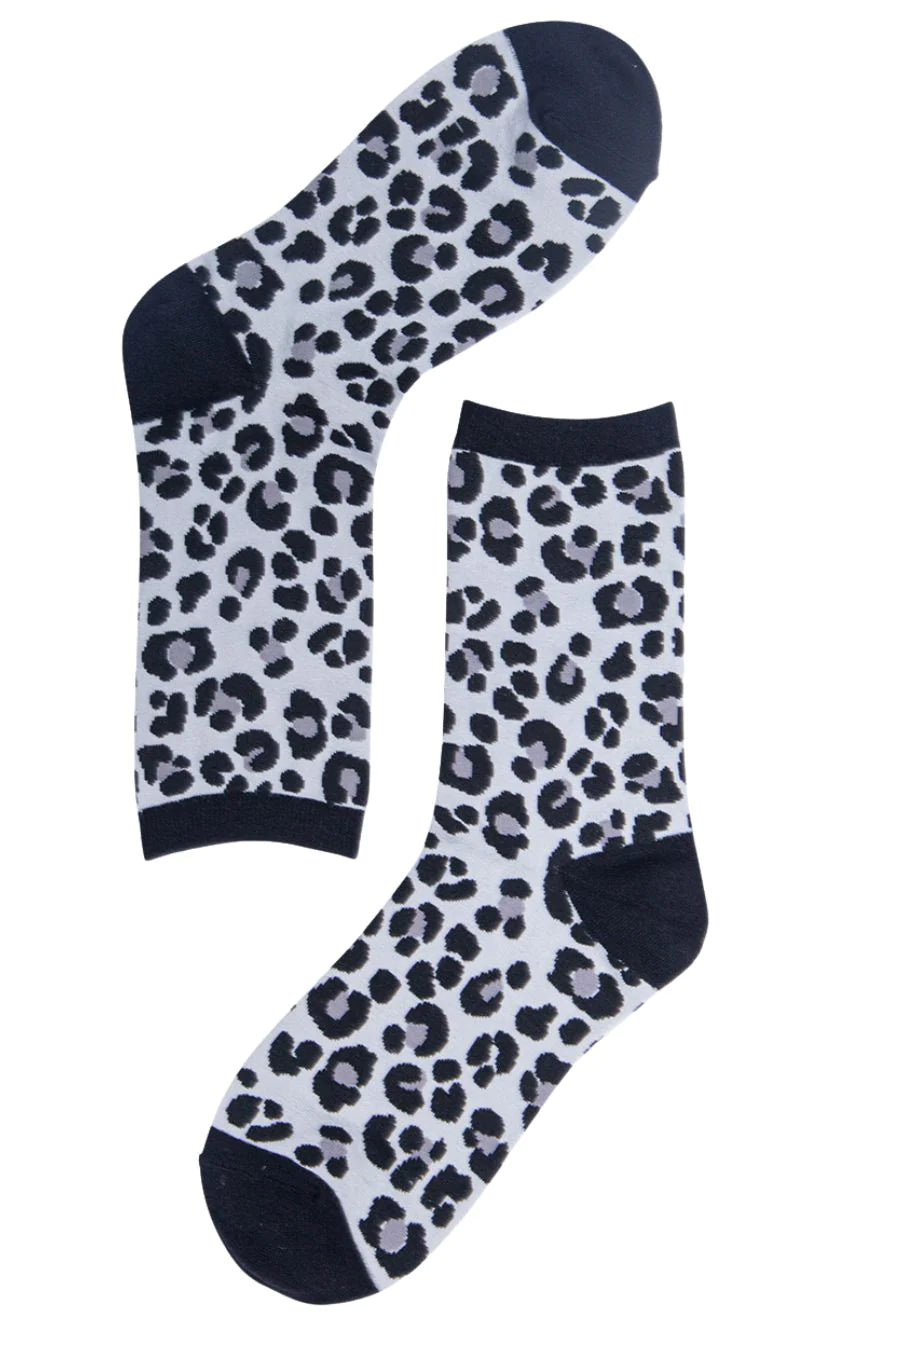 Grey & Black Leopard Print Socks